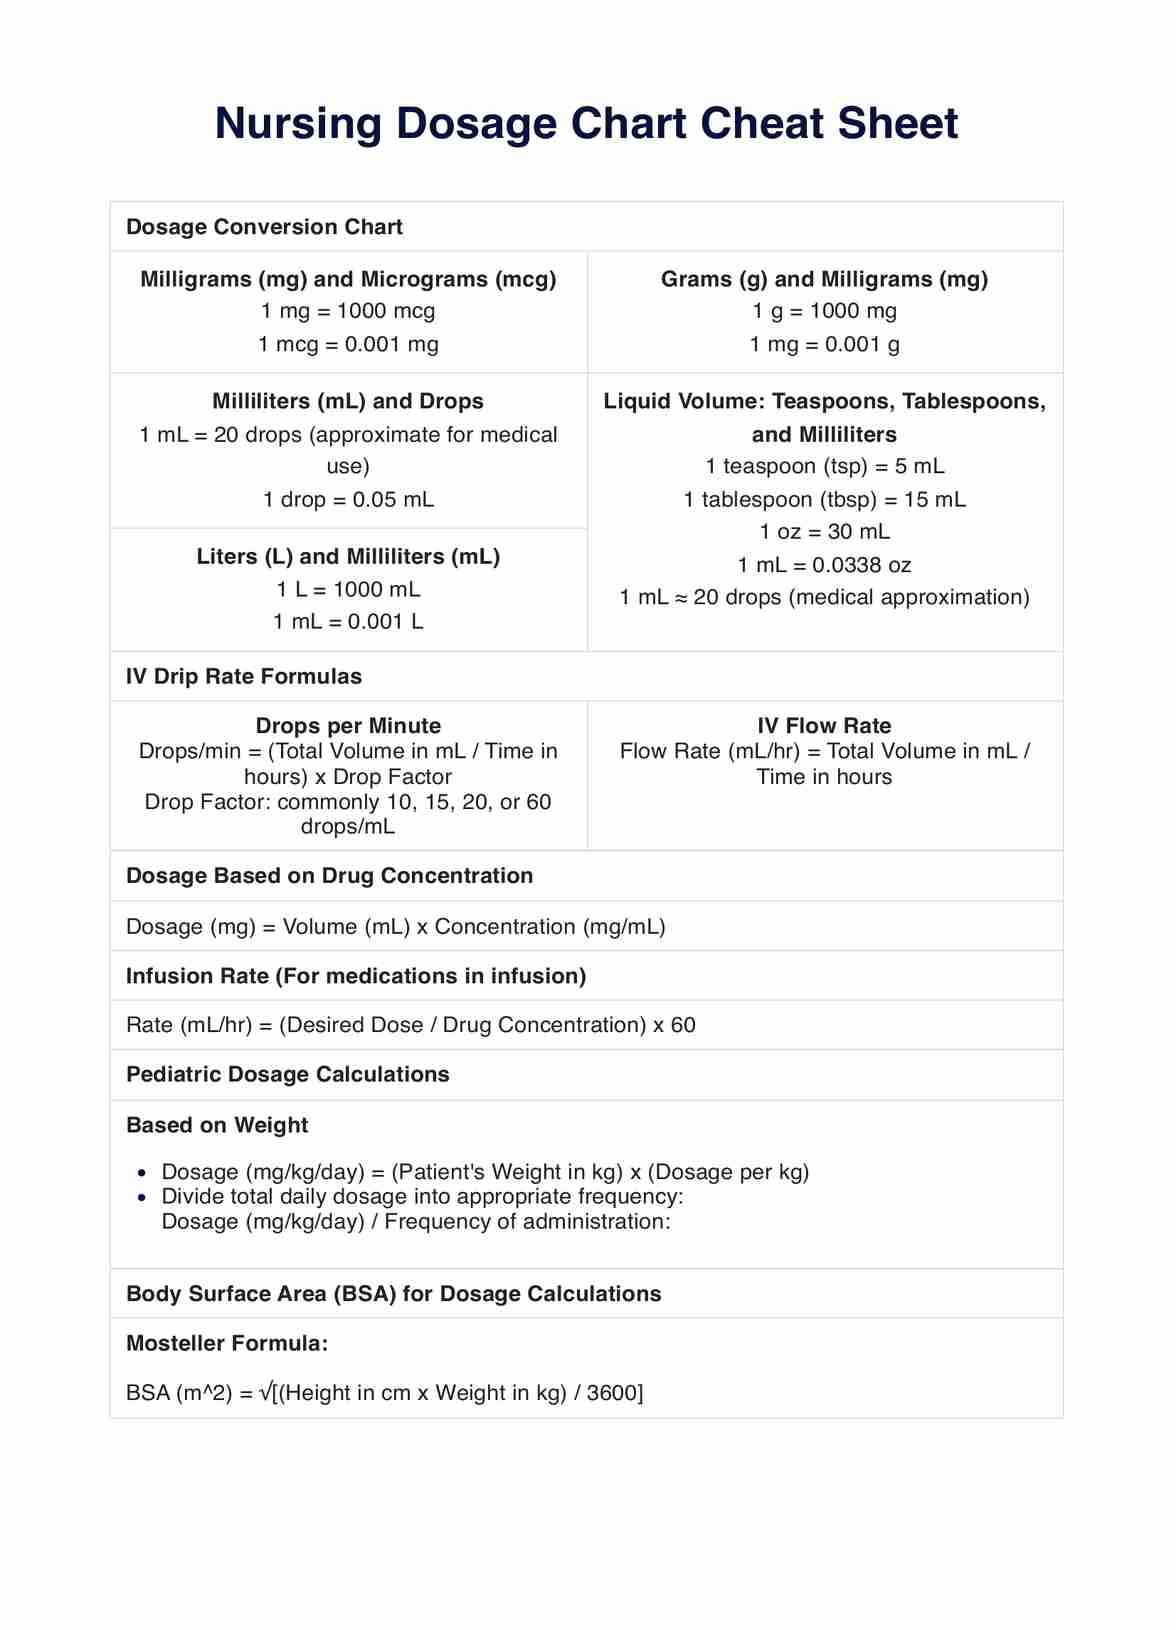 Nursing Dosage Chart Cheat Sheet PDF Example